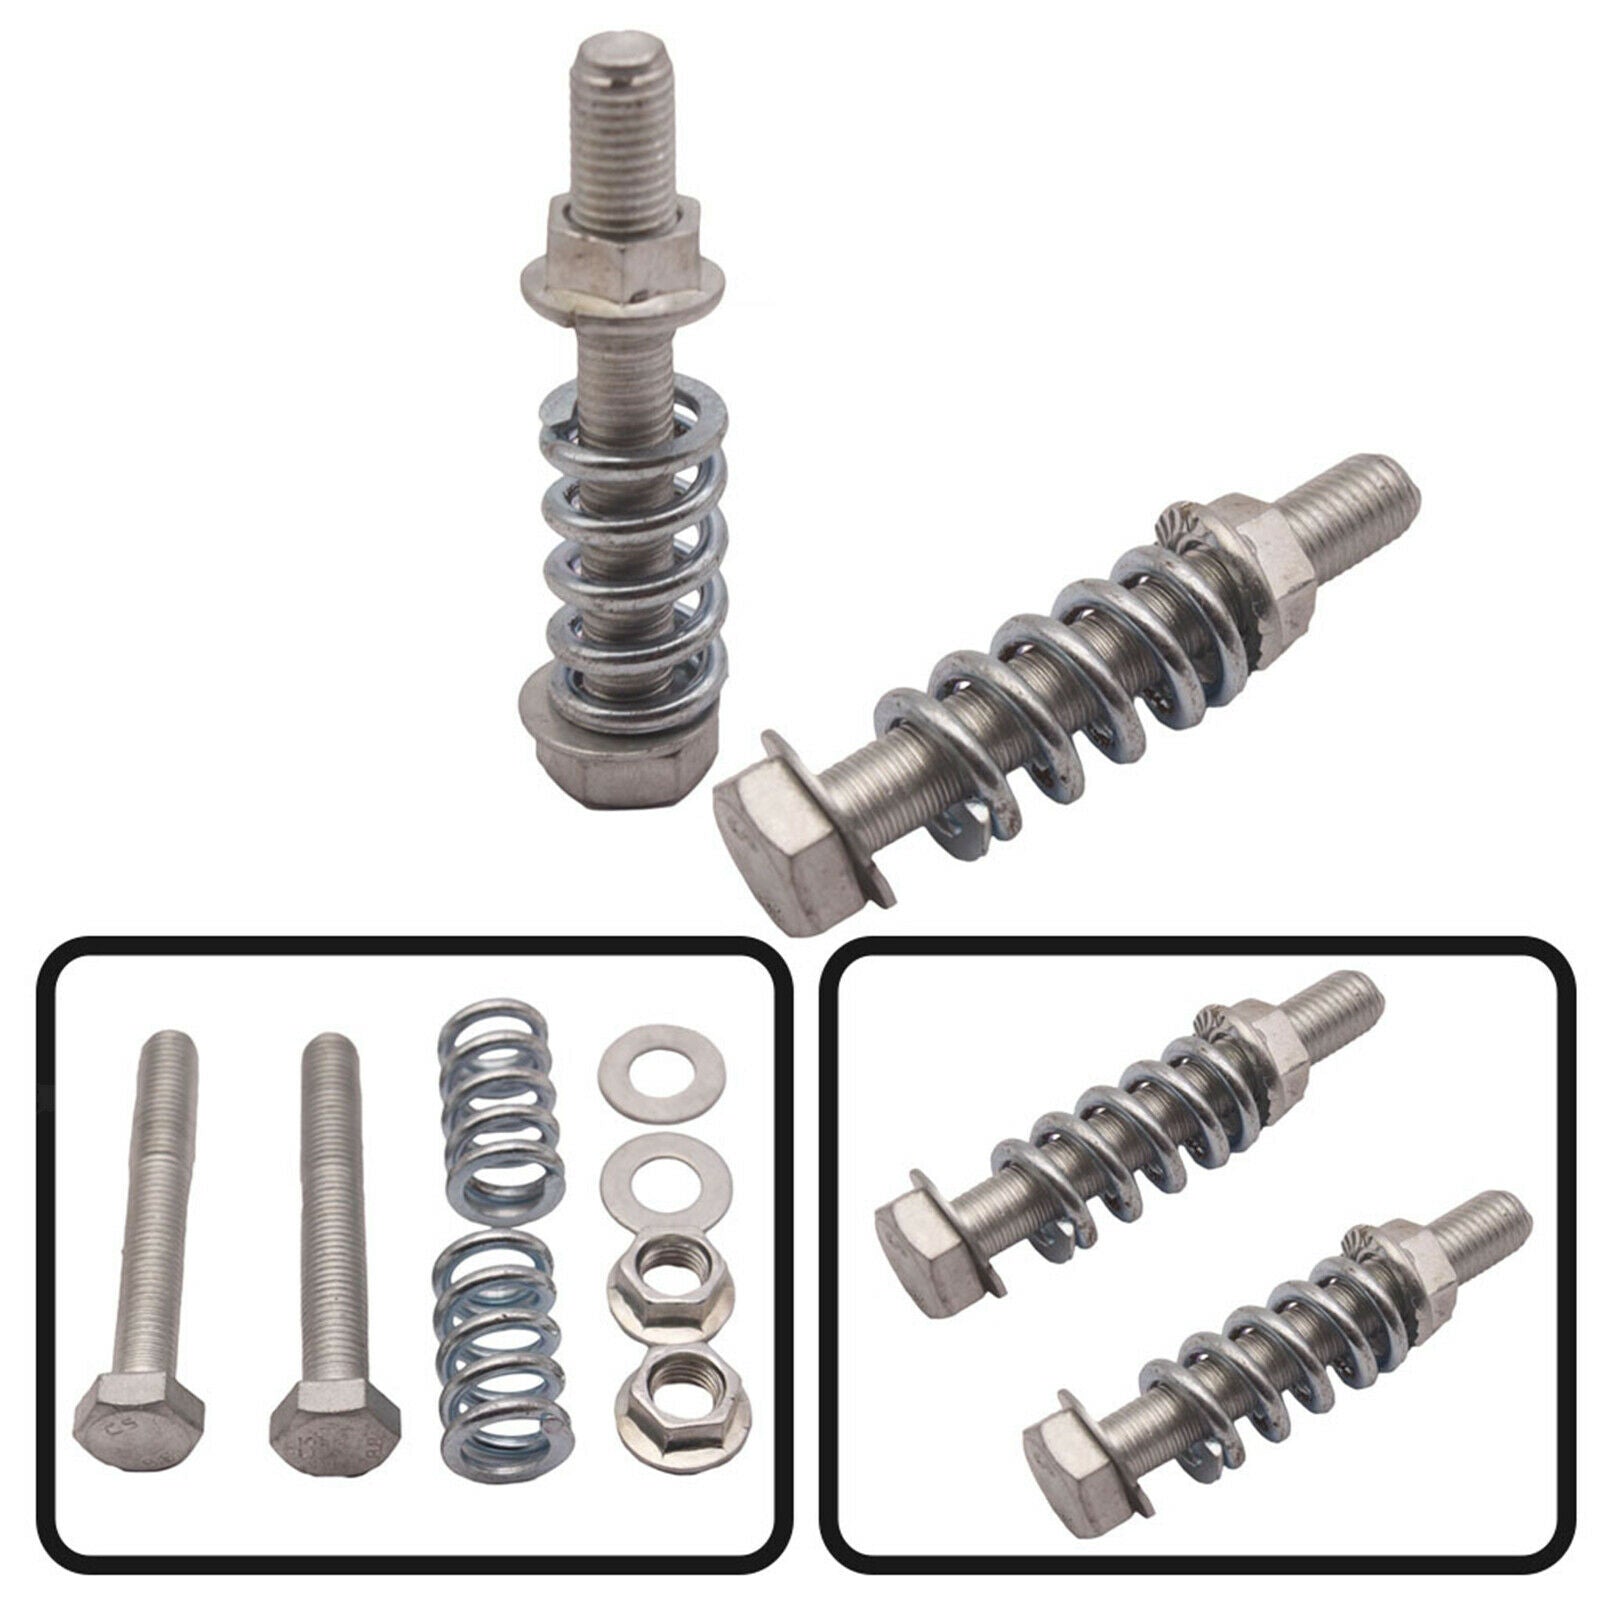 2 Pieces M10x1.5 Exhaust Bolt Spring Stud Nut Set Repair Replacement Parts